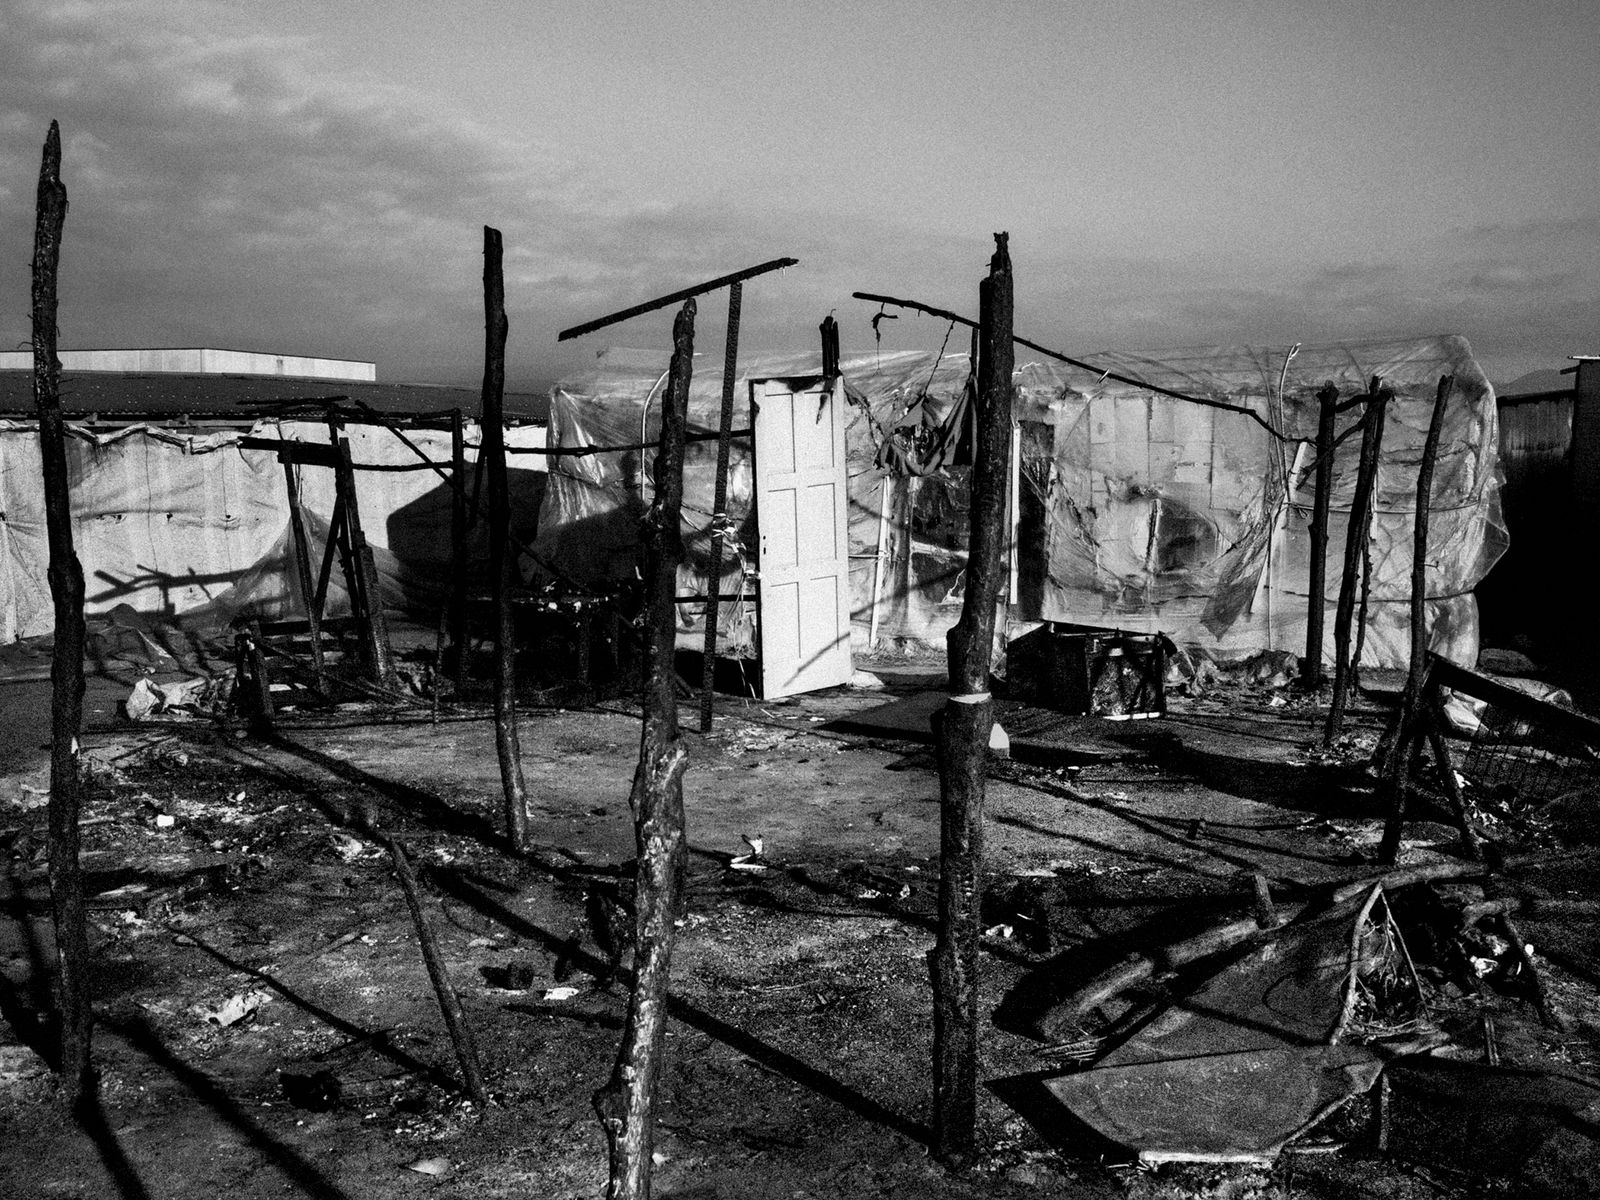 © Marco Zanella - Italy. 2019. San Ferdinando, Calabria. Remains of the barracks after a big fire in the seasonal migrant workes slum.